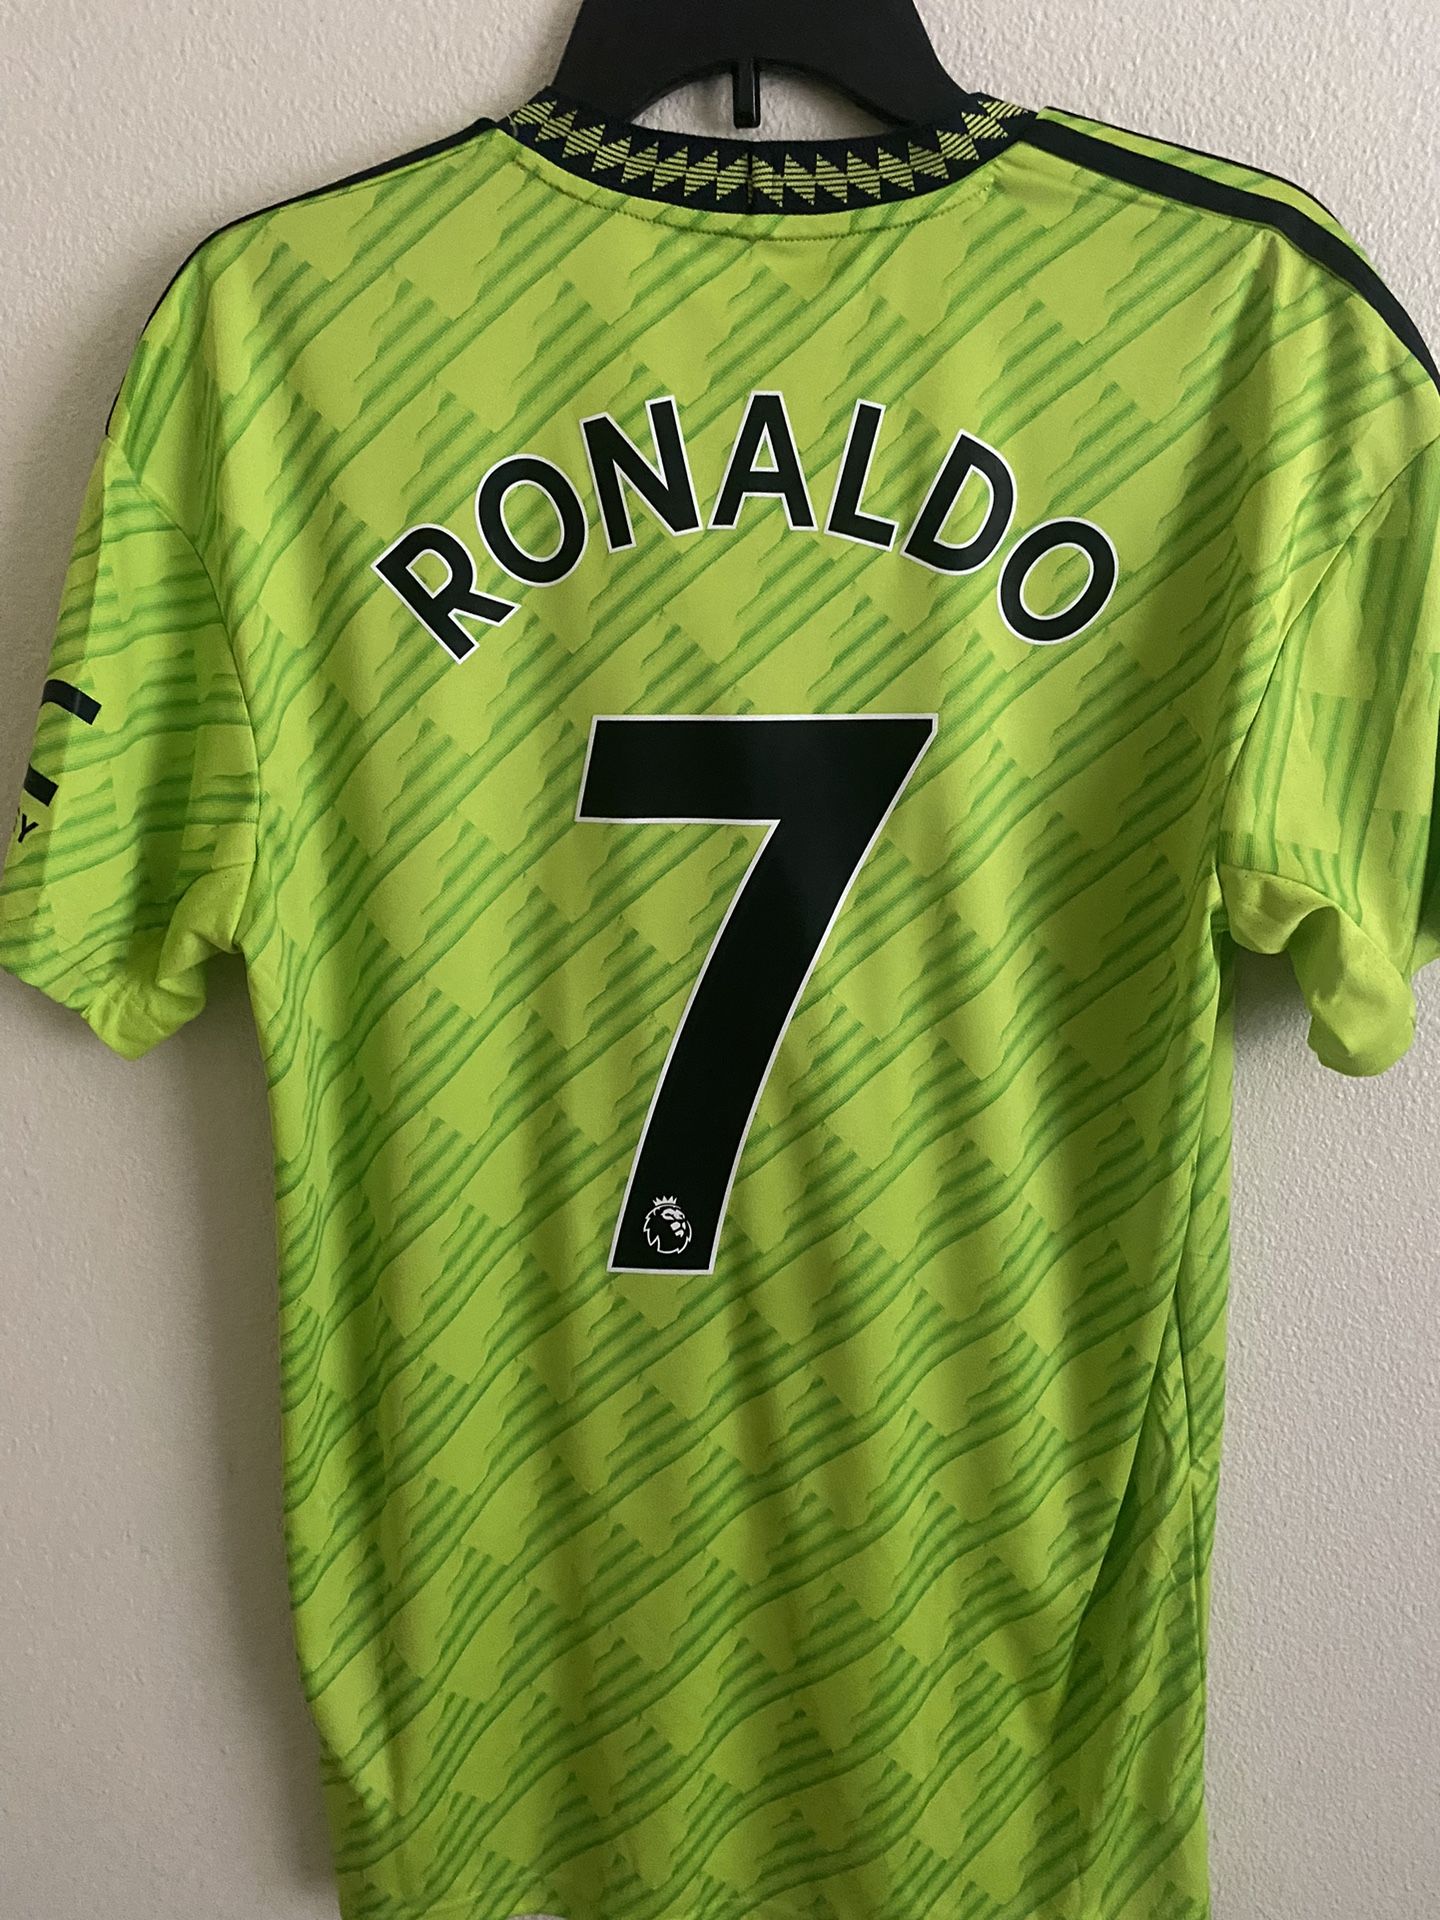 ronaldo jersey for sale